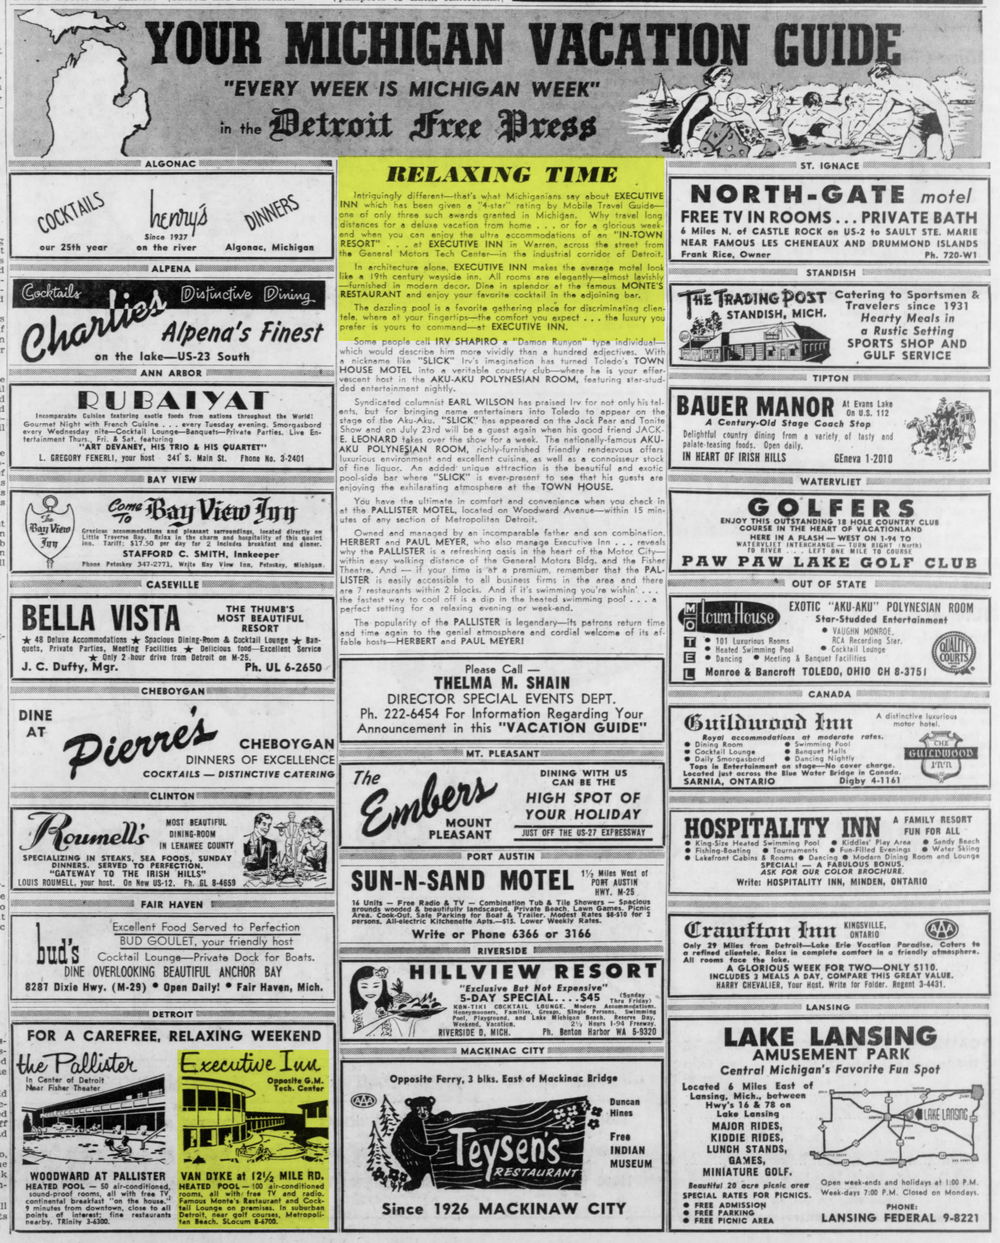 Executive Inn Motel - 1962 Vacation Guide